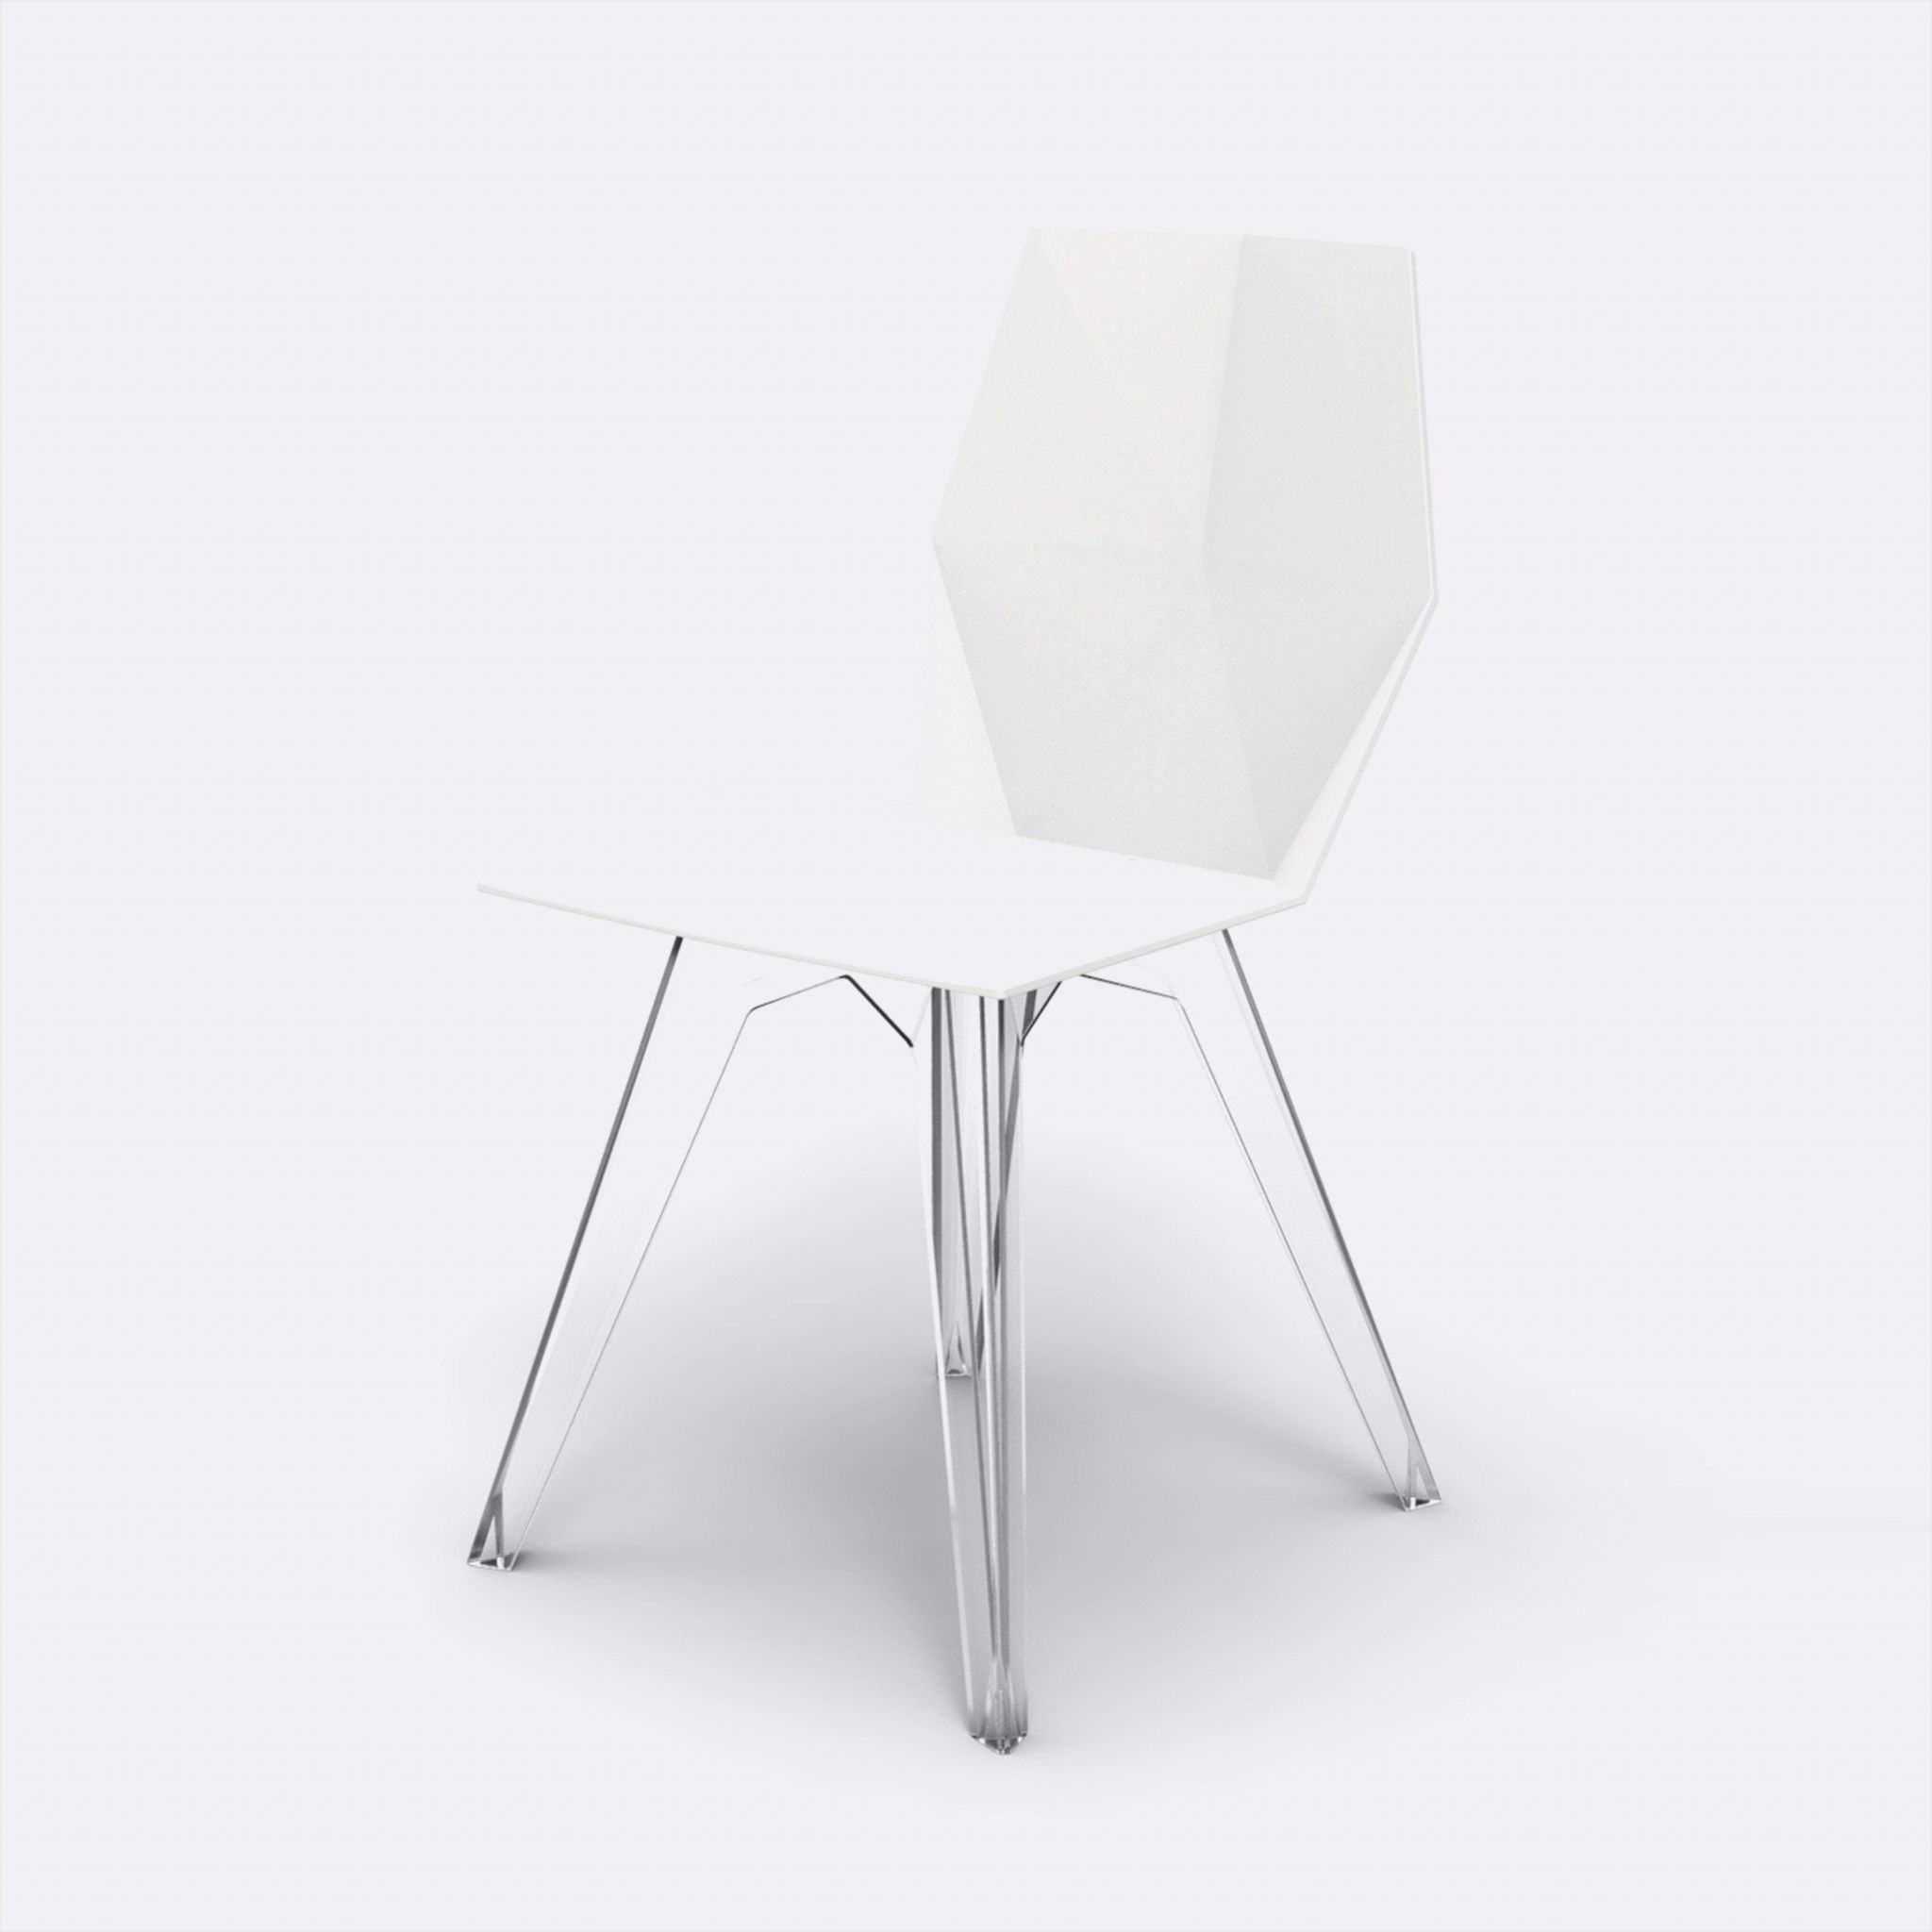 table de jardin aluminium blanc ainsi que chaise bois cuisine chaise bois metal chaise roulette 0d coleymixan de table de jardin aluminium blanc